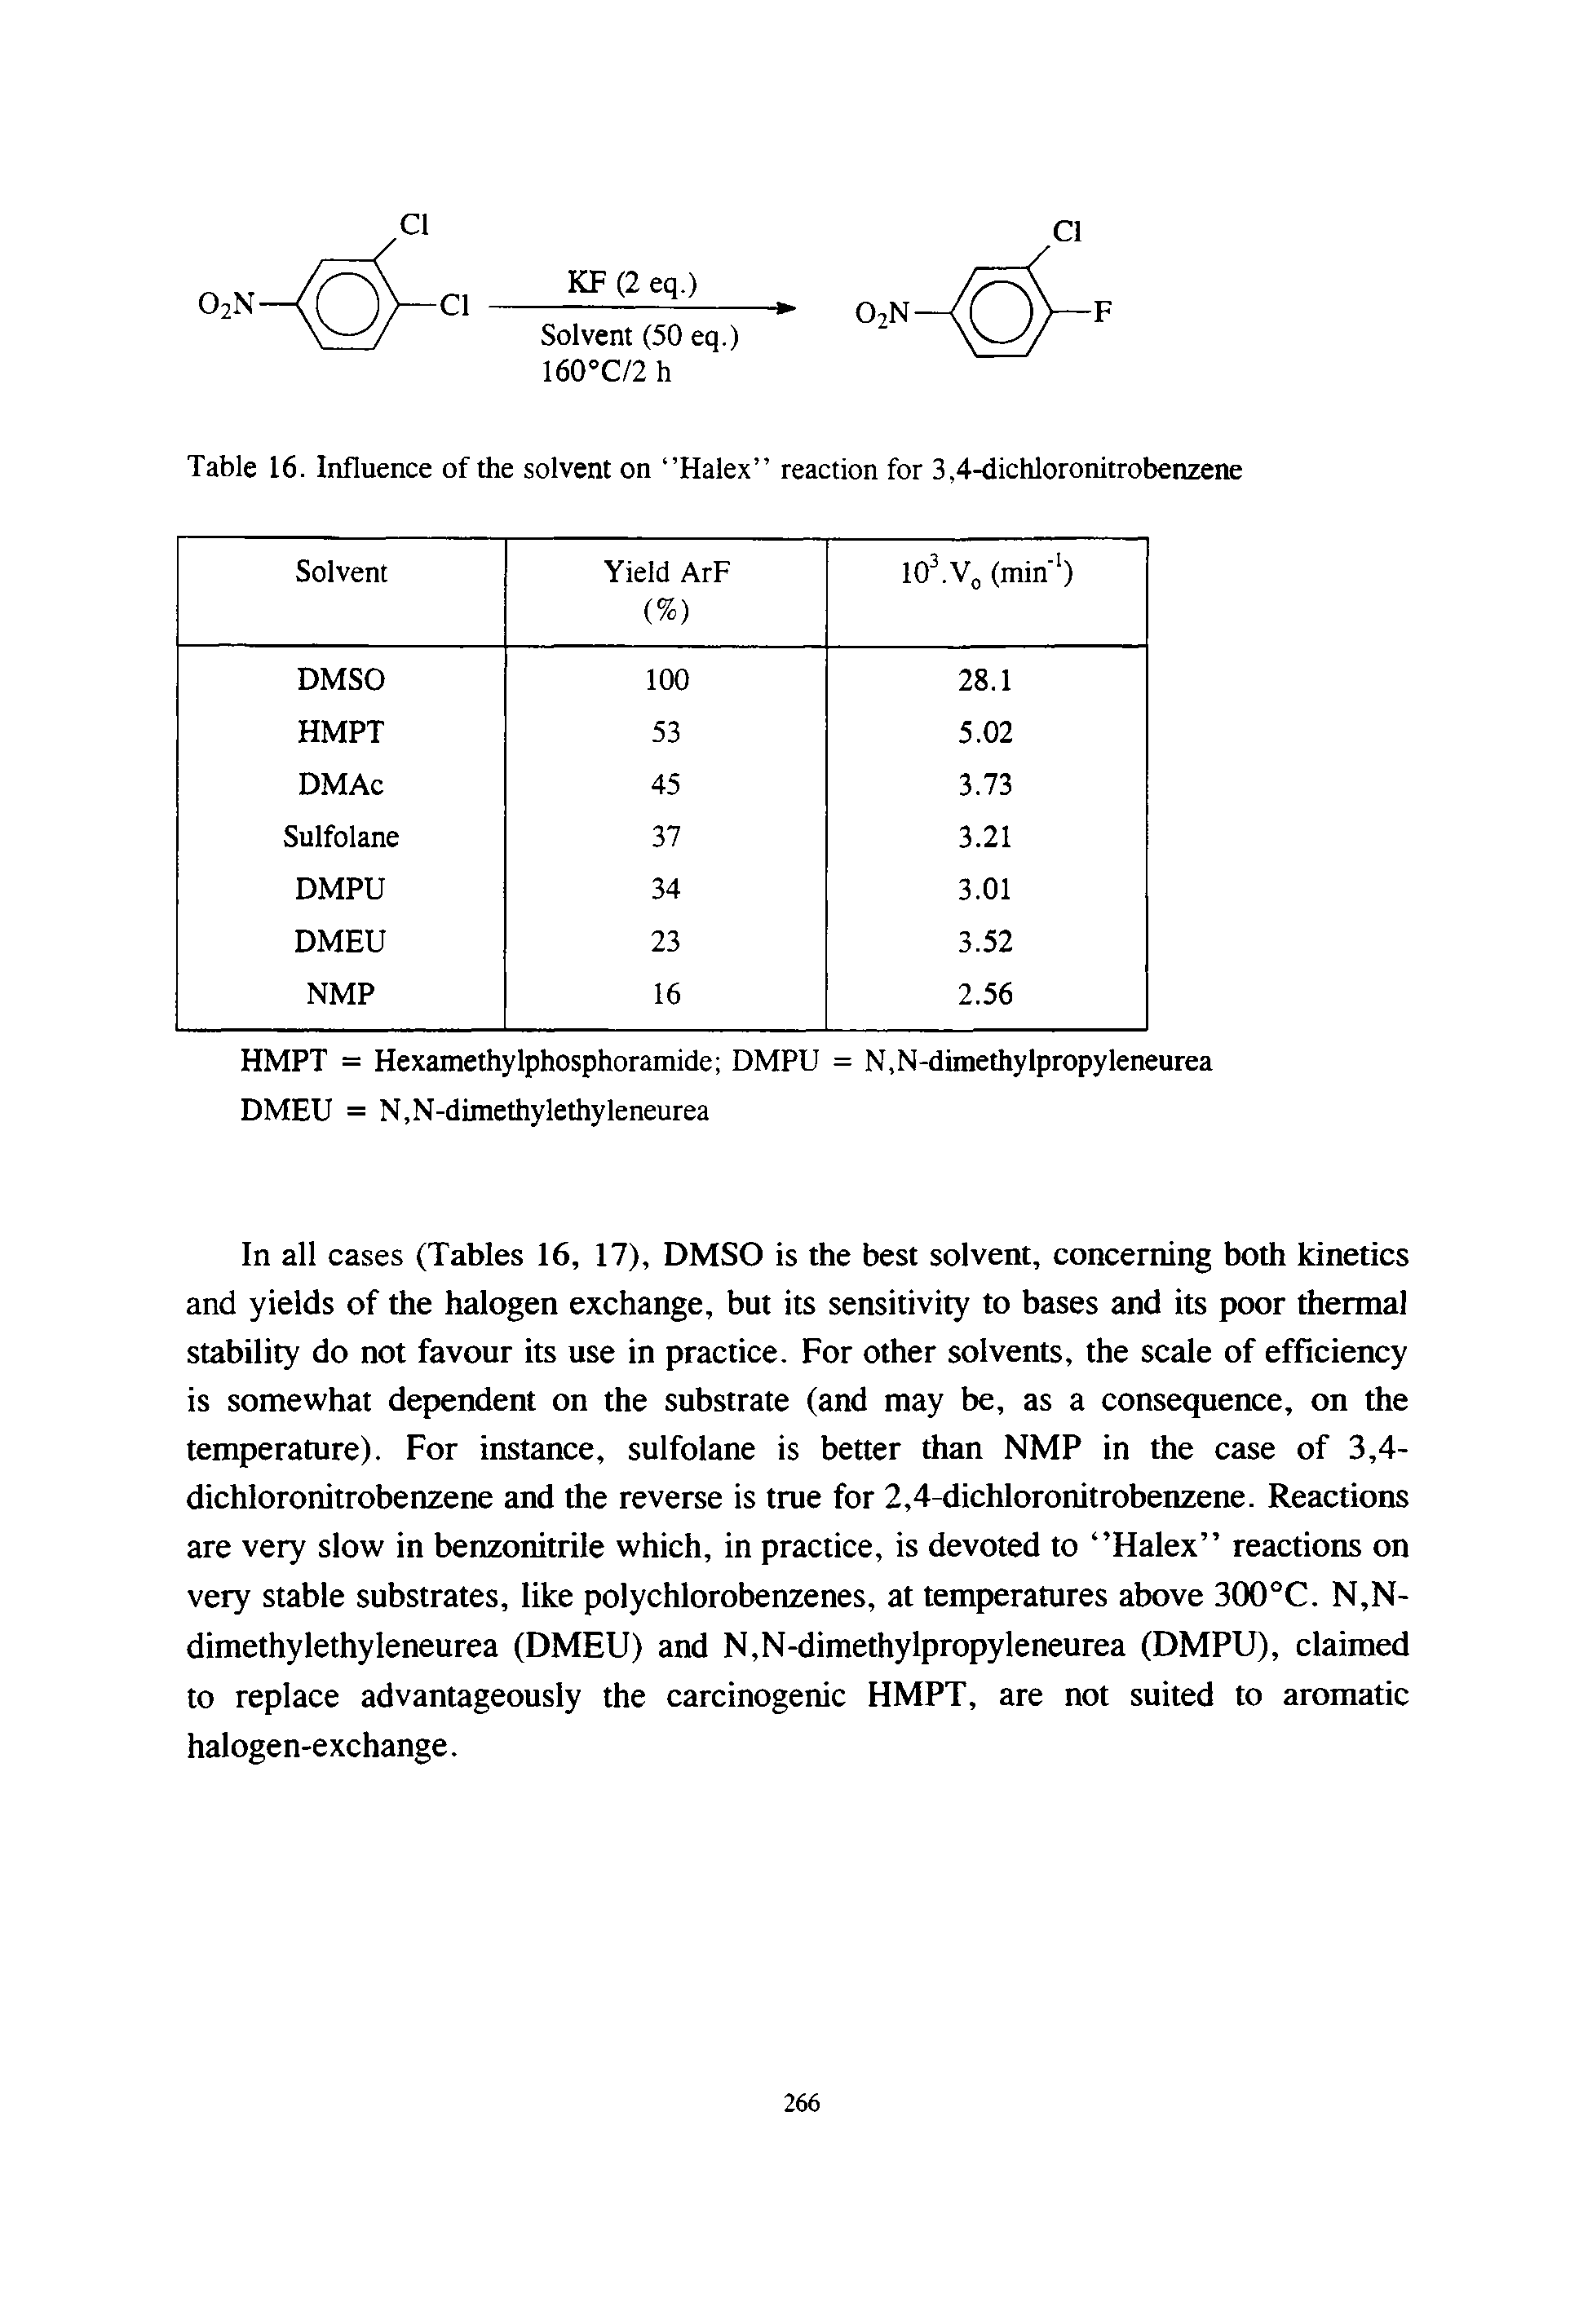 Table 16. Influence of the solvent on Halex reaction for 3,4-dichloronitrobenzene...